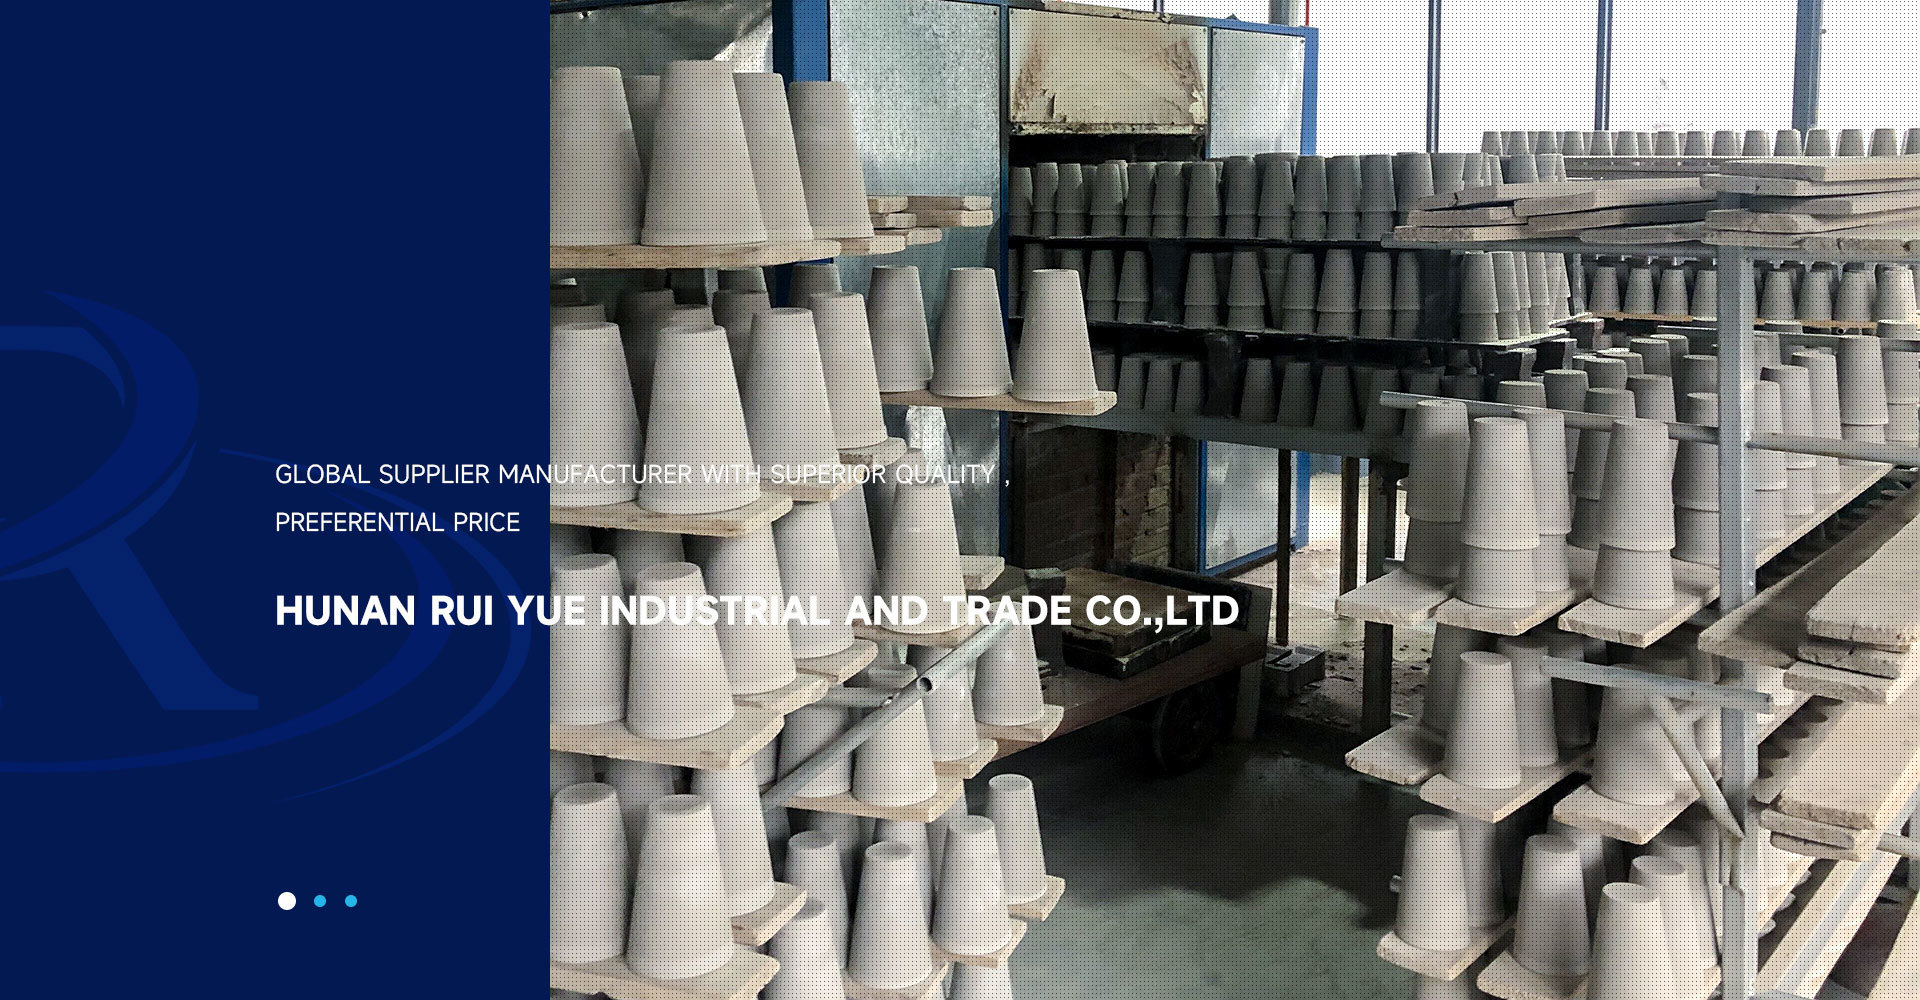 Hunan Rui Yue Industrial And Trade Co.,Ltd